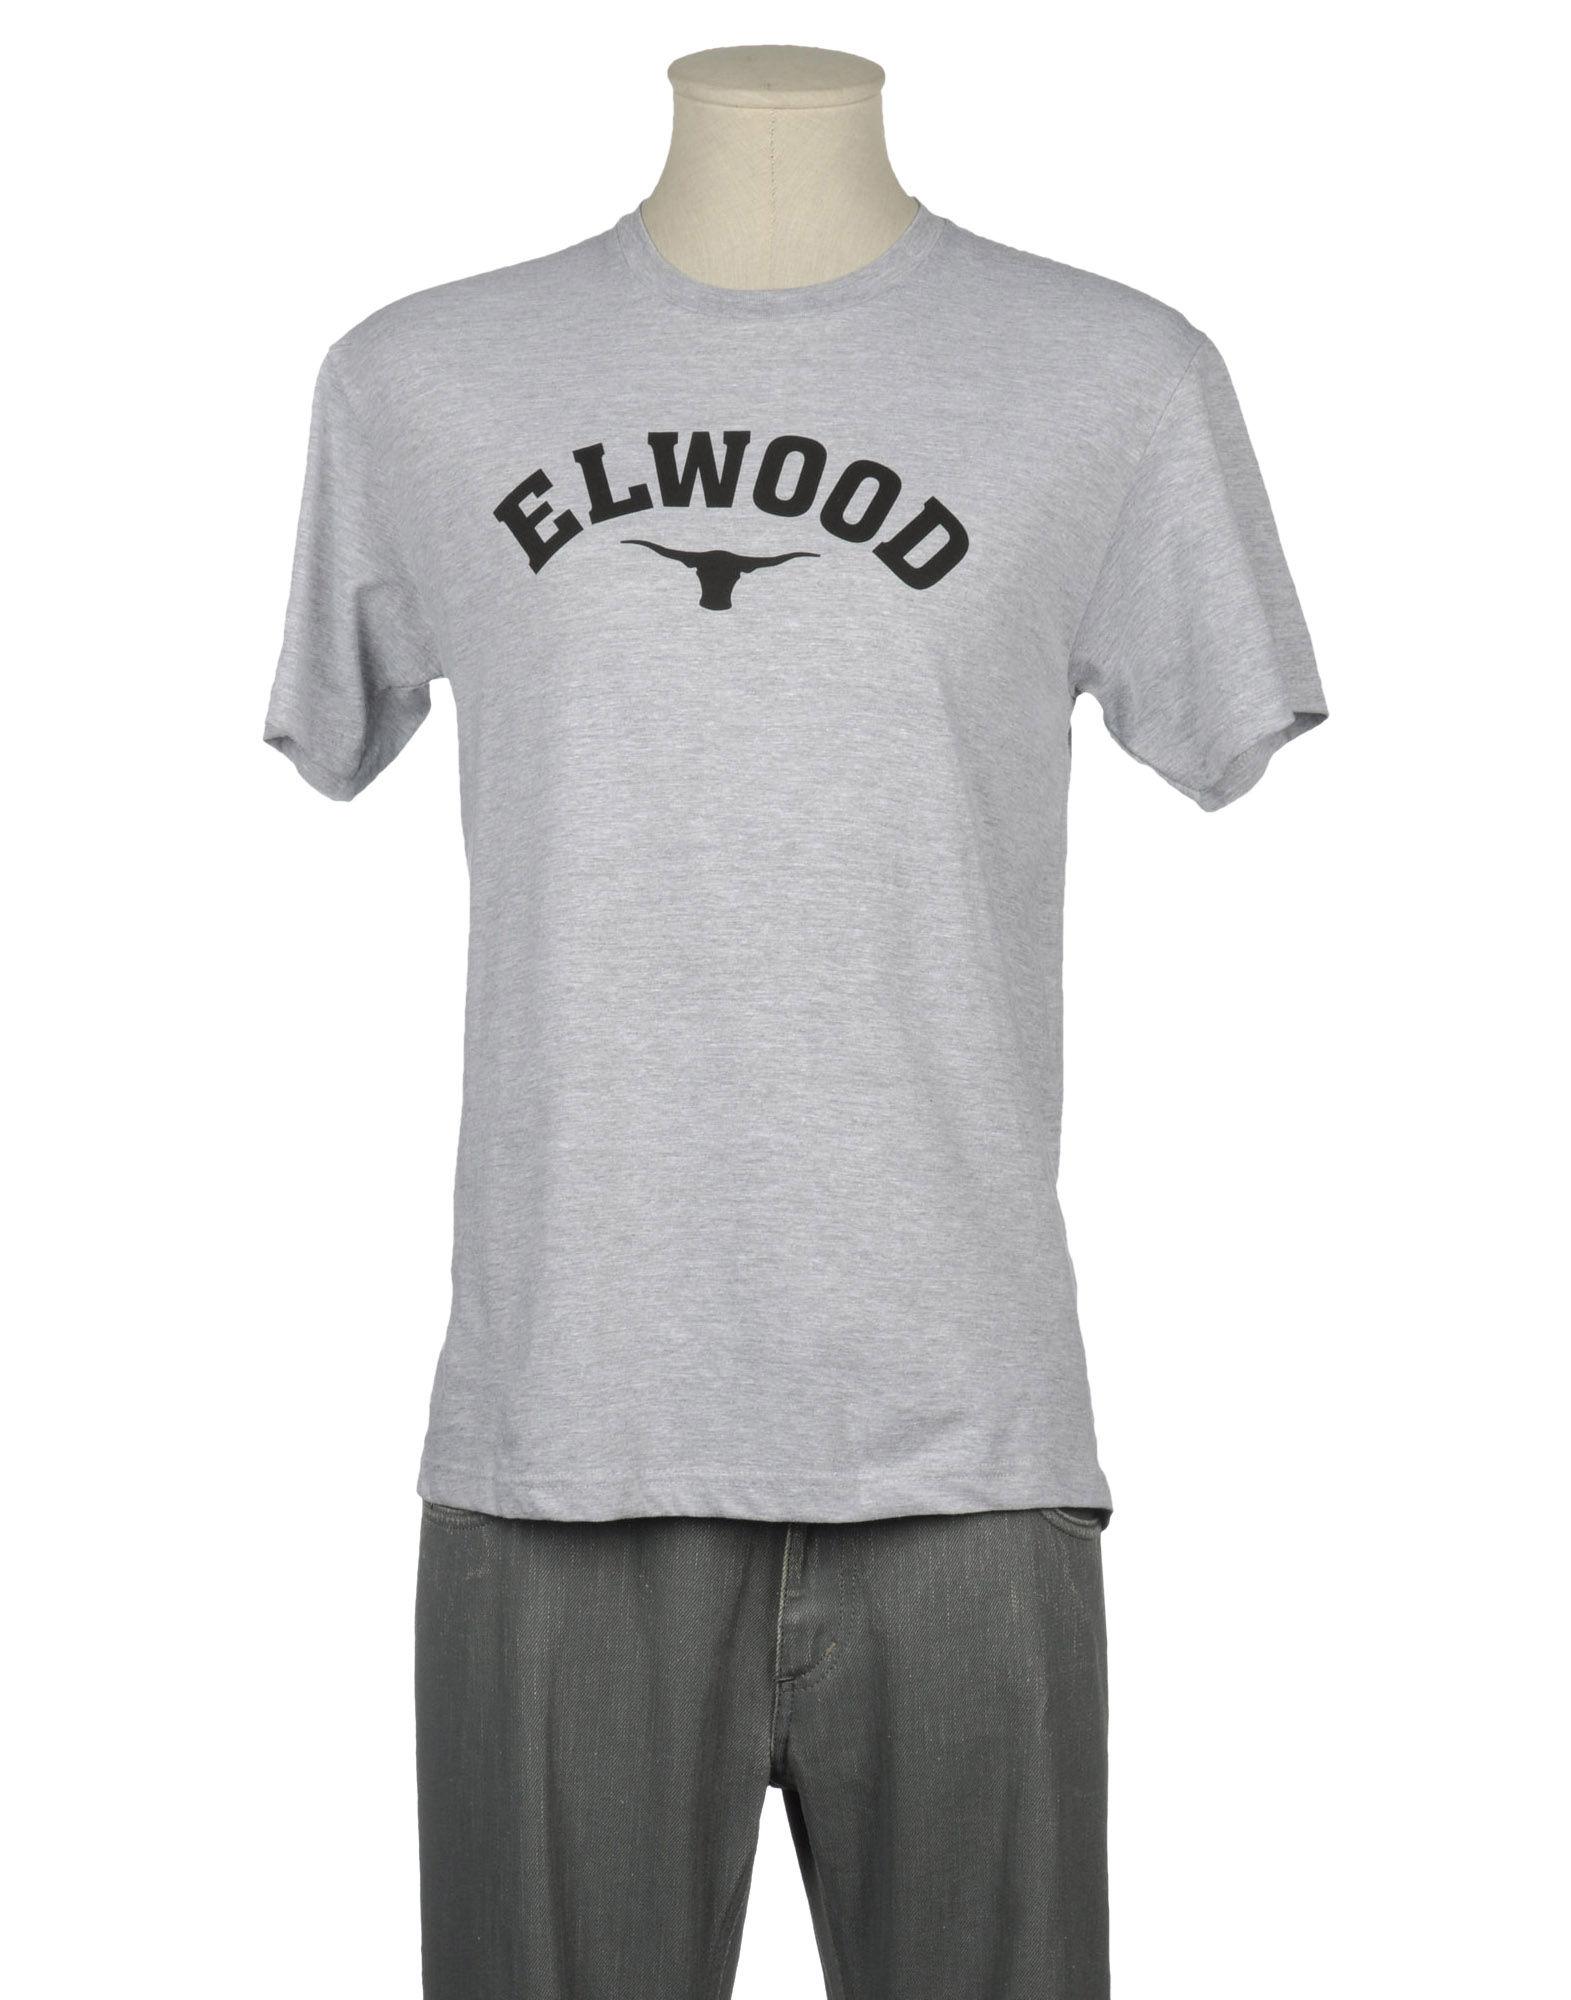 Foto elwood camisetas de manga corta
